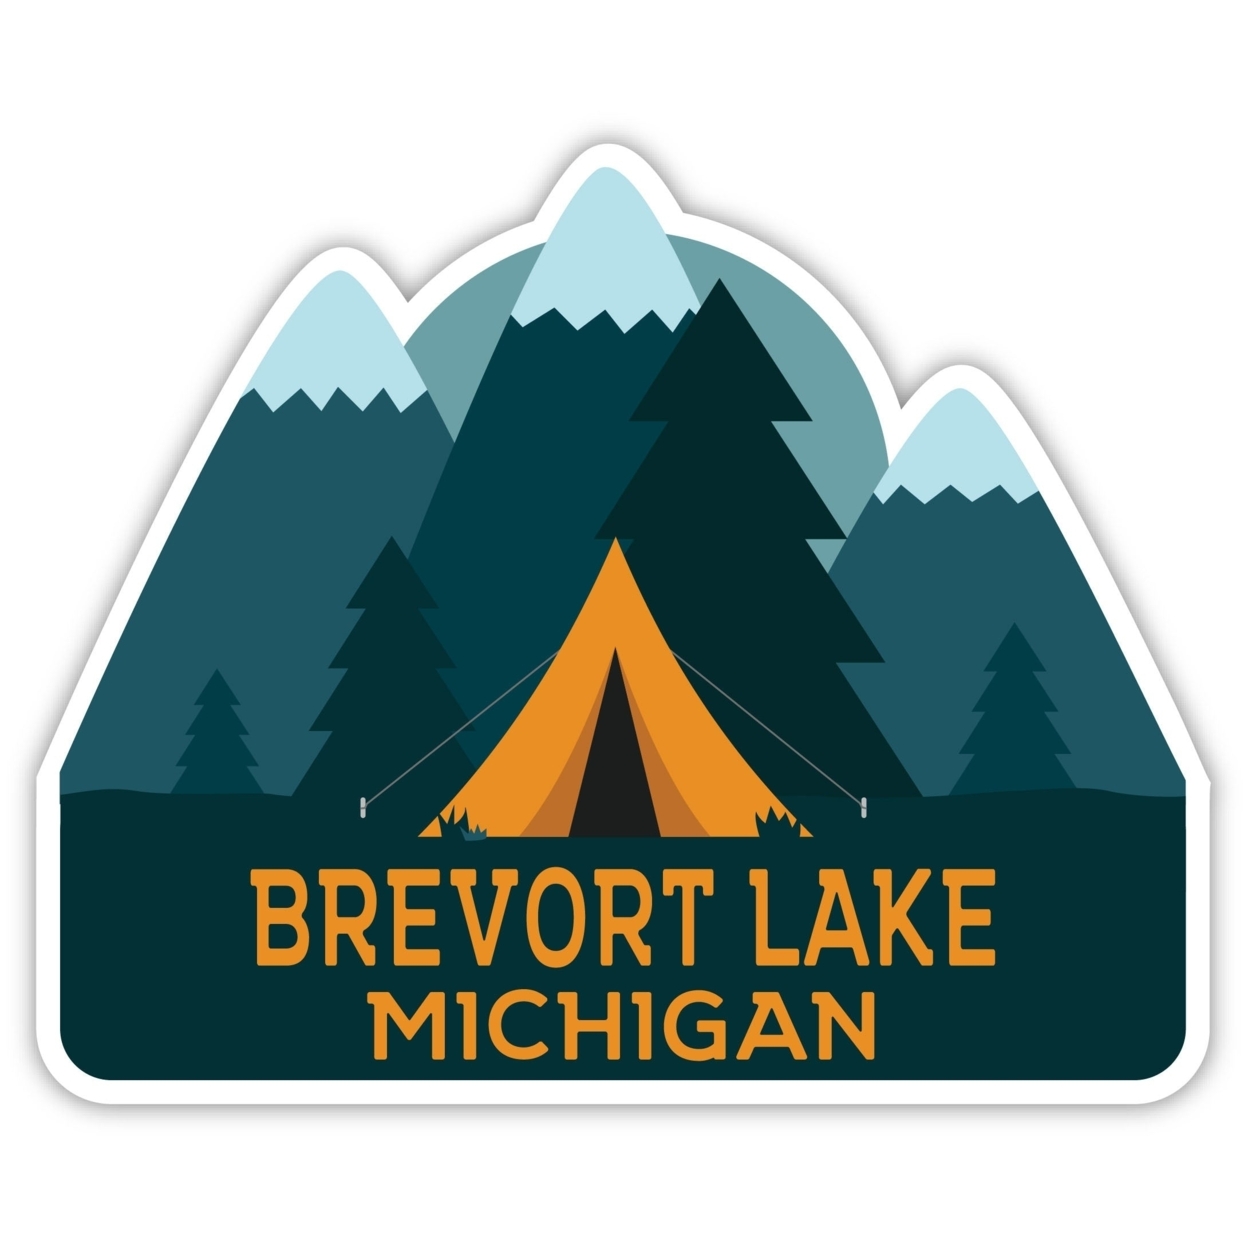 Brevort Lake Michigan Souvenir Decorative Stickers (Choose Theme And Size) - 4-Pack, 2-Inch, Tent